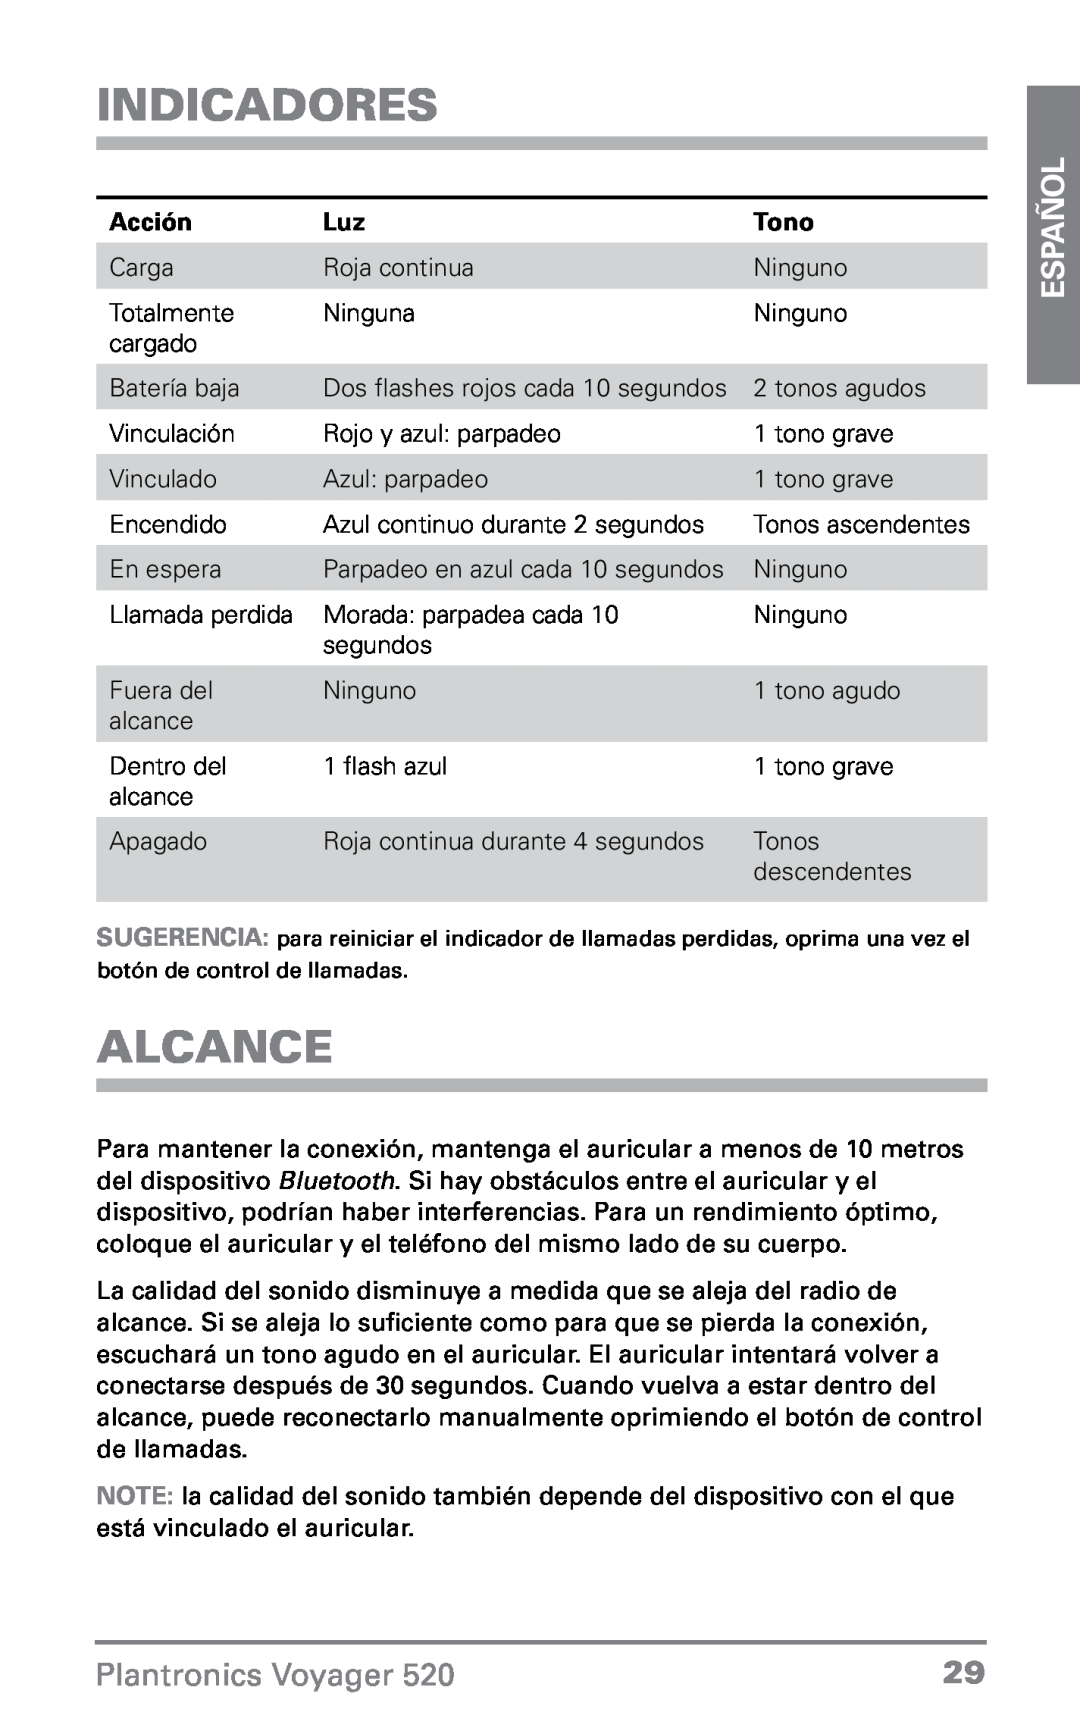 Plantronics 520 manual Indicadores, Alcance, Tono, Español, Plantronics Voyager, Acción 